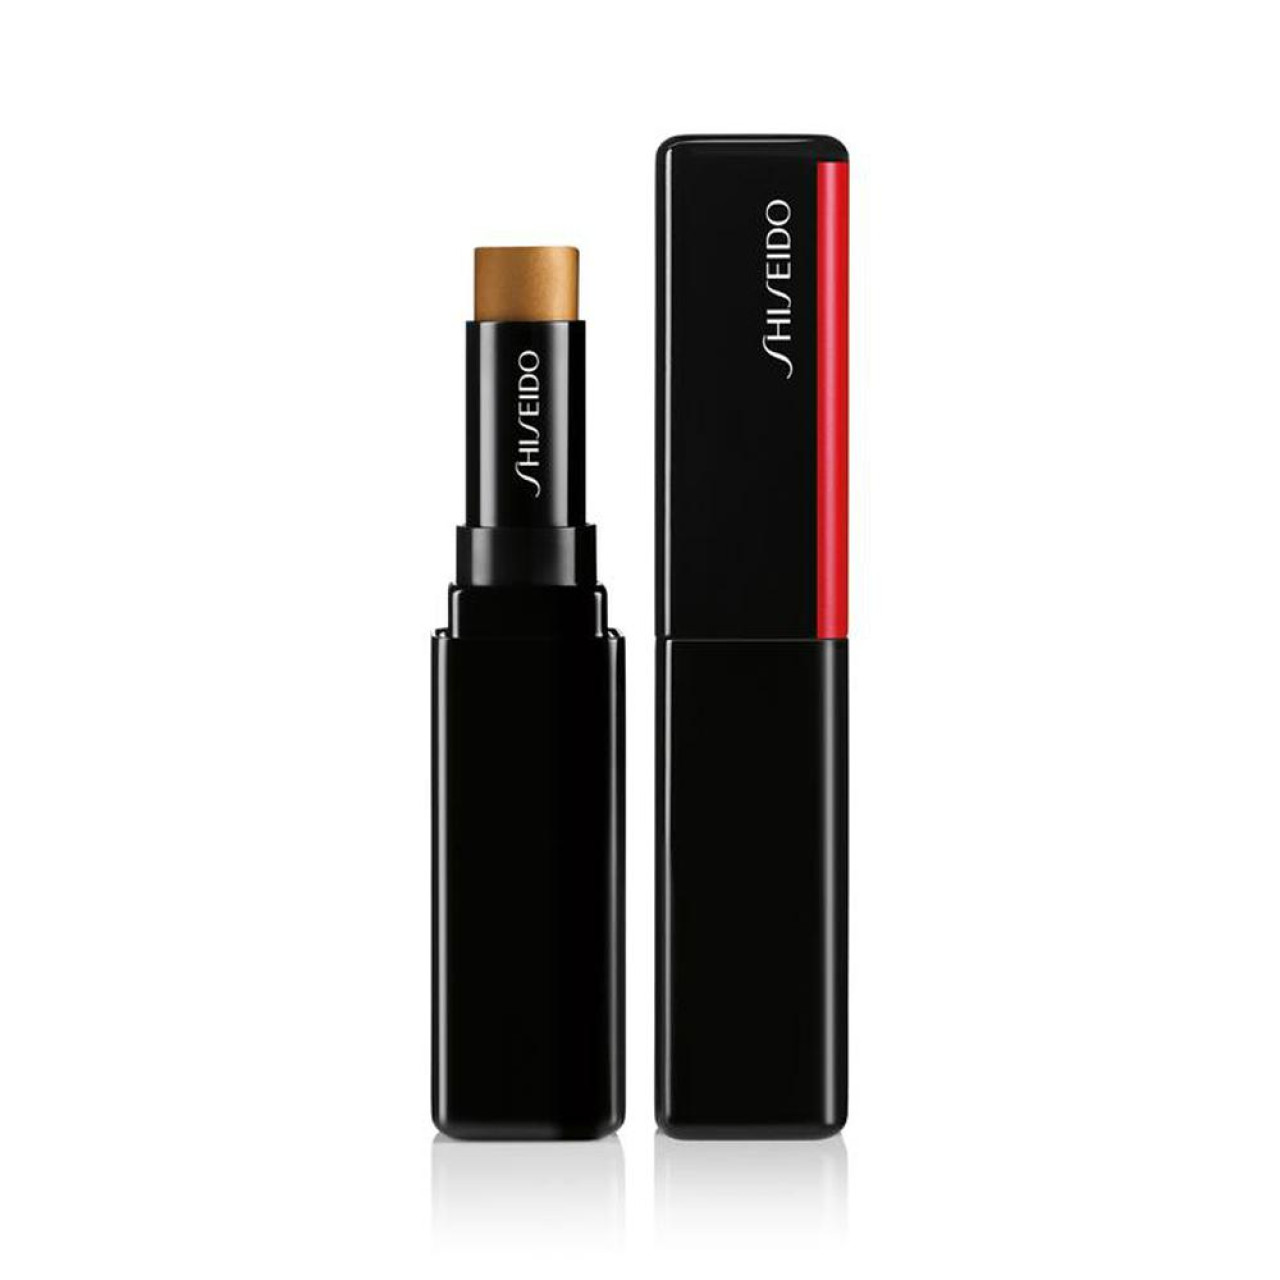 Shiseido synchro skin self-refreshing gelstick concealer 303